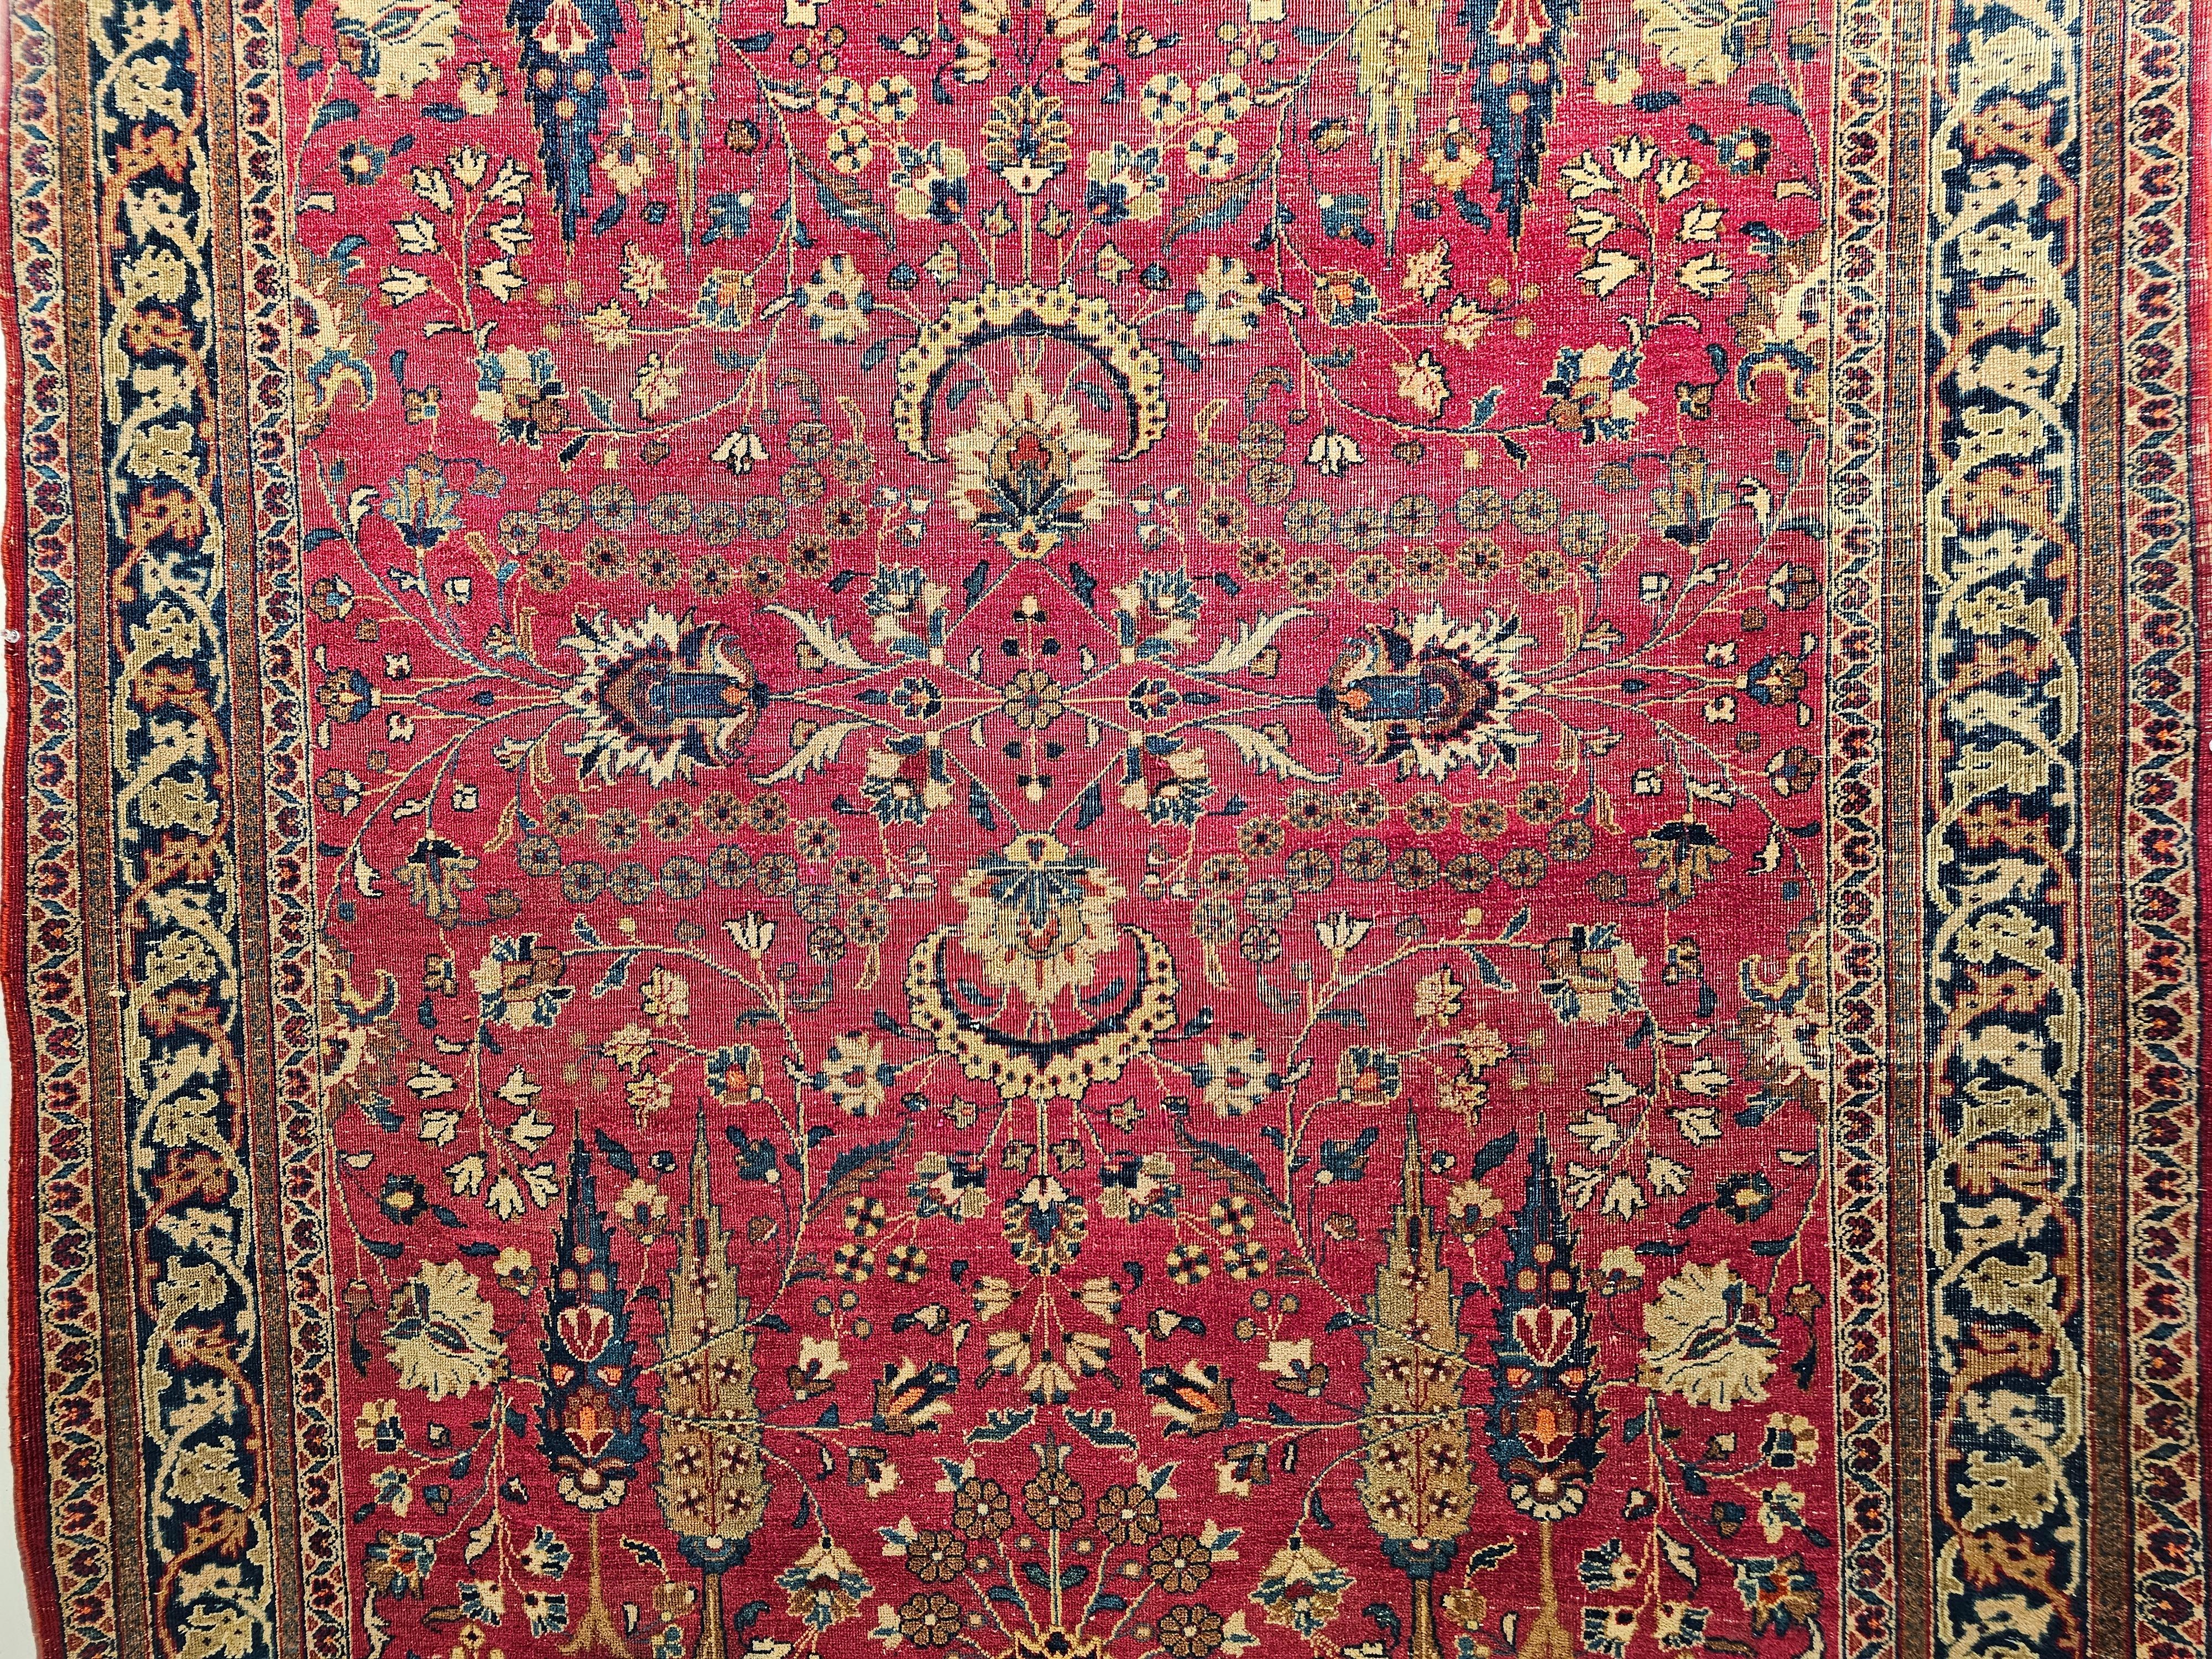 19th Century Persian Khorassan in Allover Floral Design in Crimson Red, Blue In Good Condition For Sale In Barrington, IL